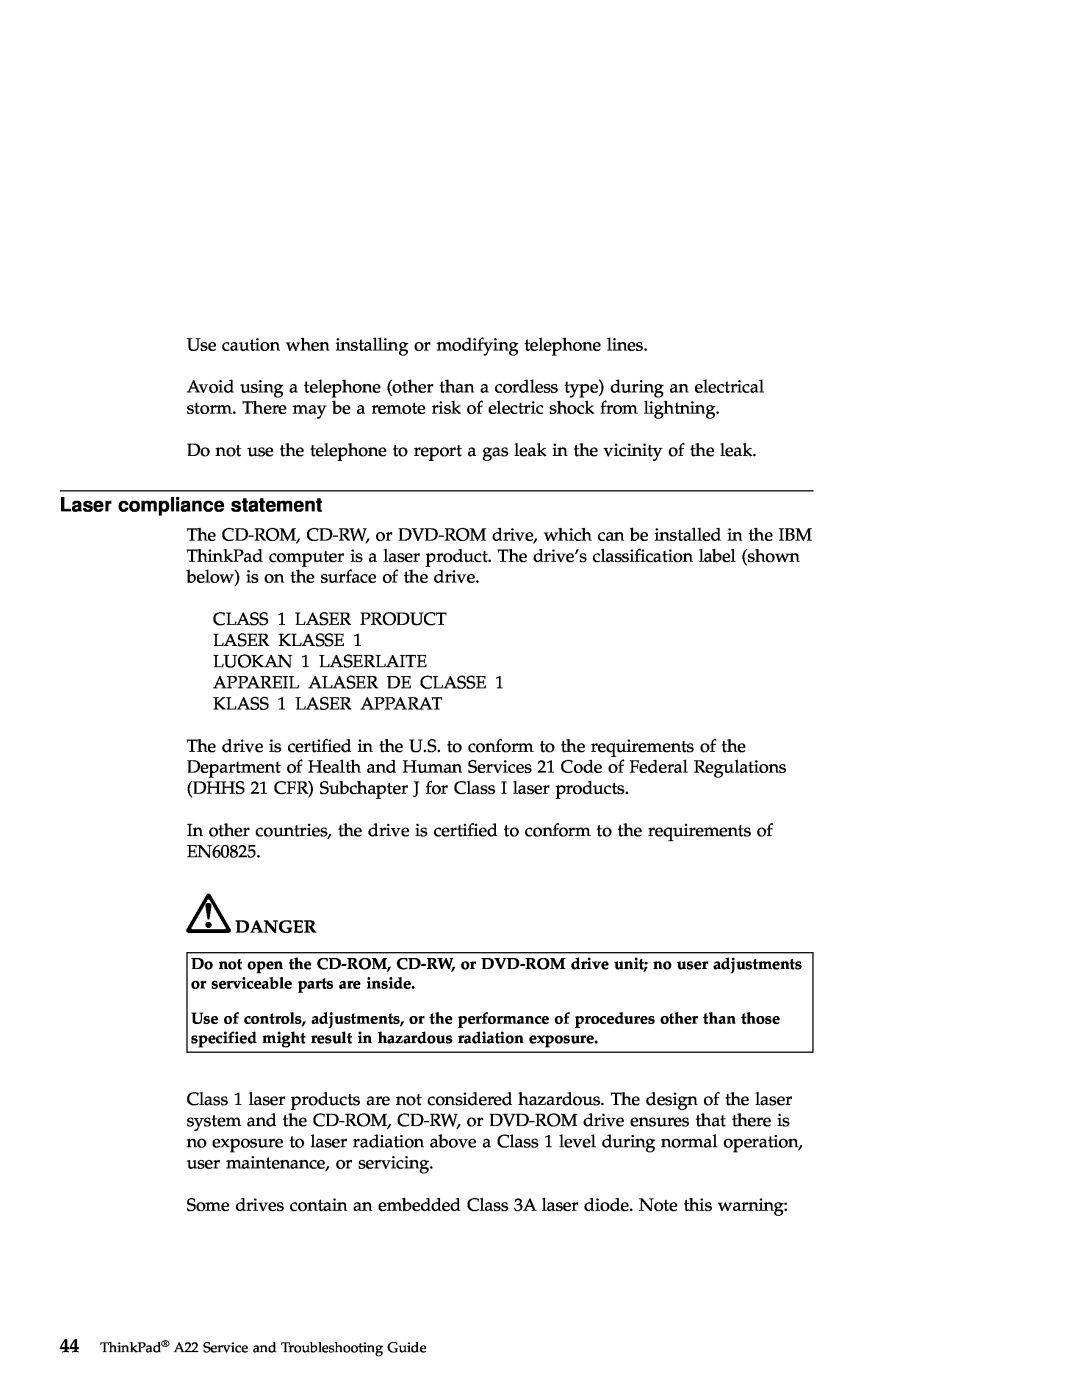 IBM A22 manual Laser compliance statement, Danger 